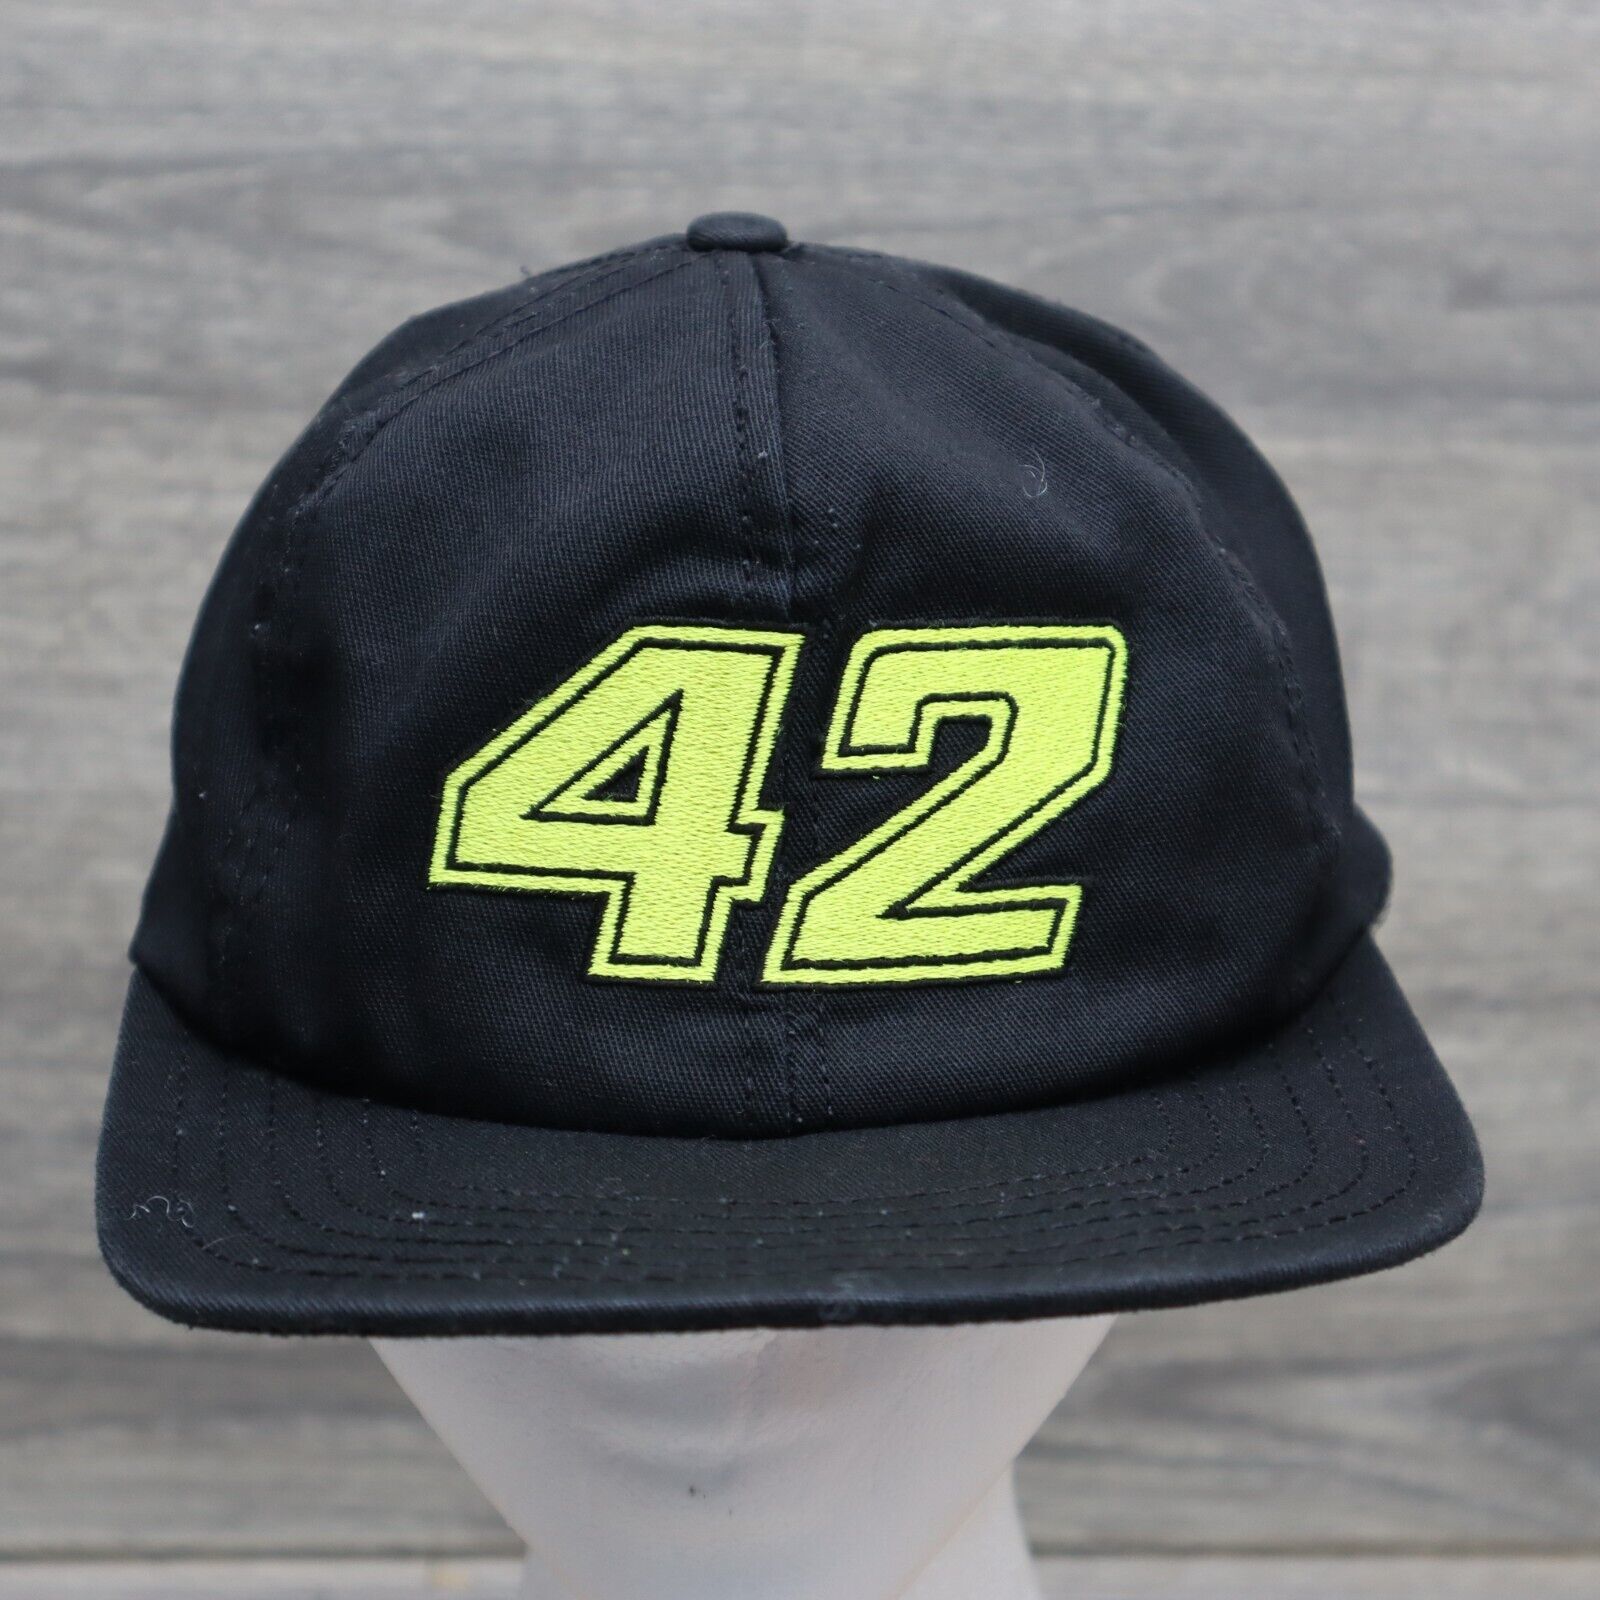 Vintage Racing Hat Men Black Yellow Snap Back Cap Casual Petty #42 Nascar Racing - $22.75